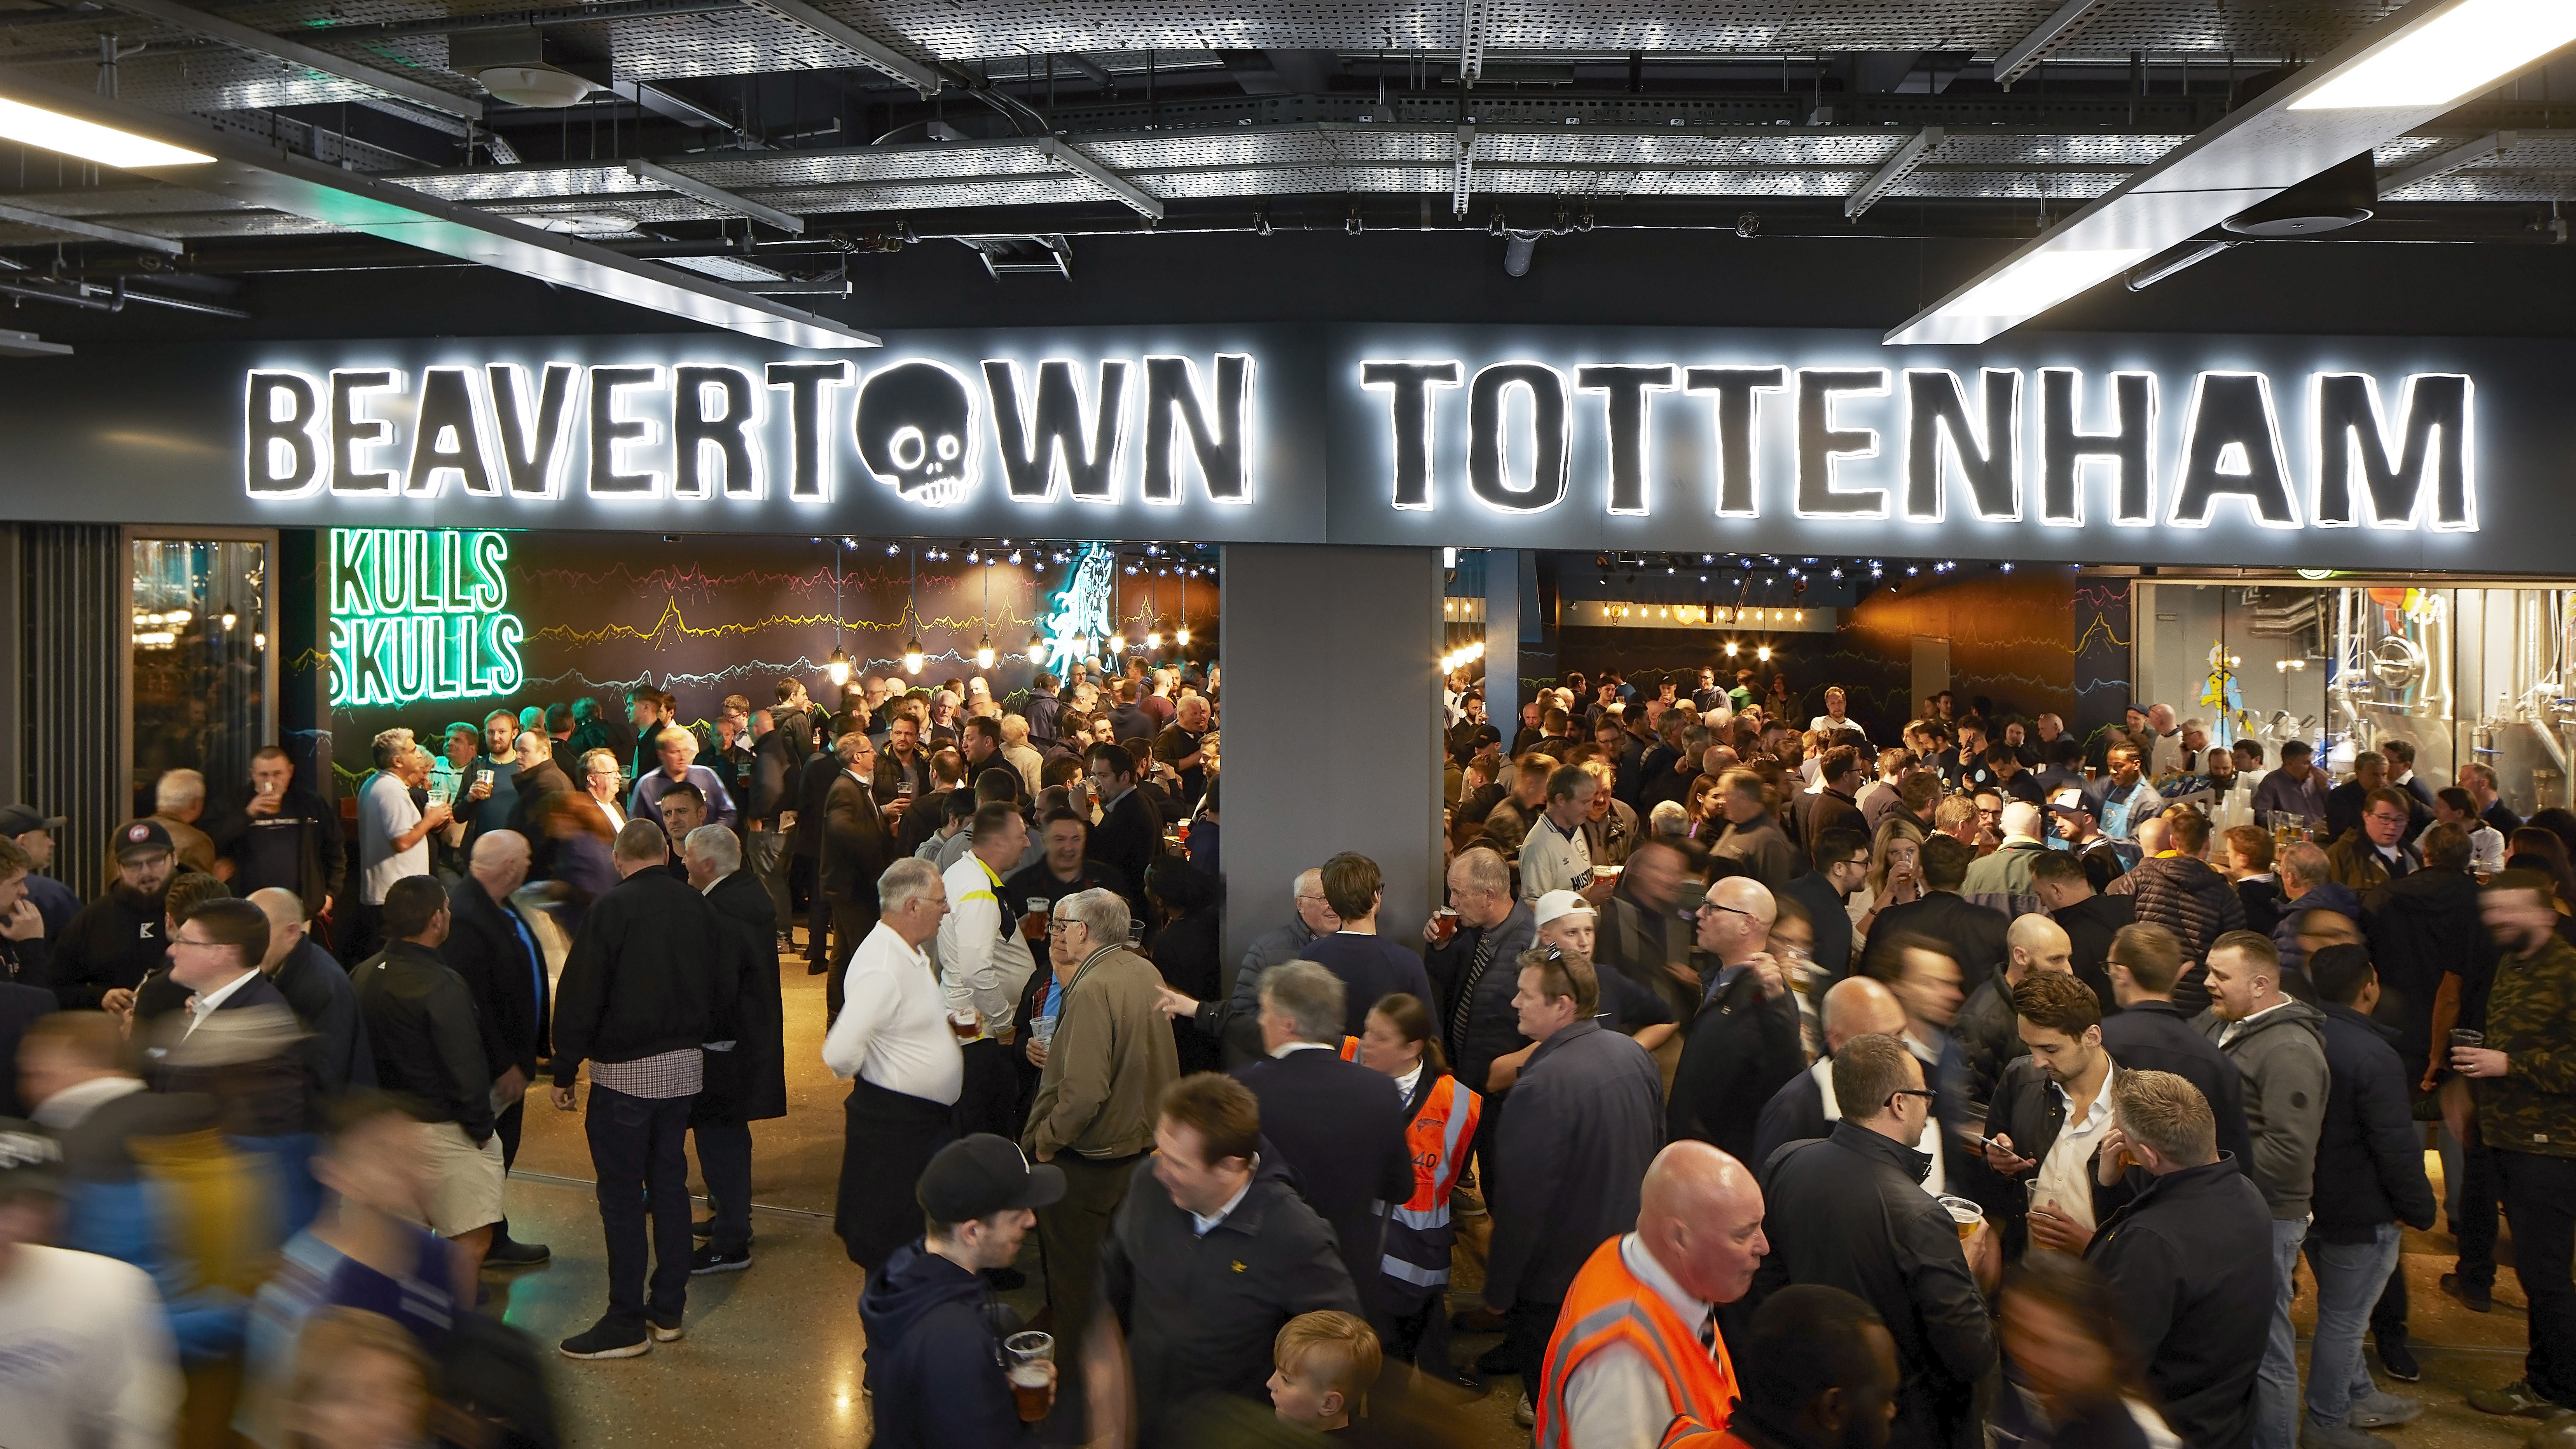 Beavertown Tottenham Taproom and Brewery